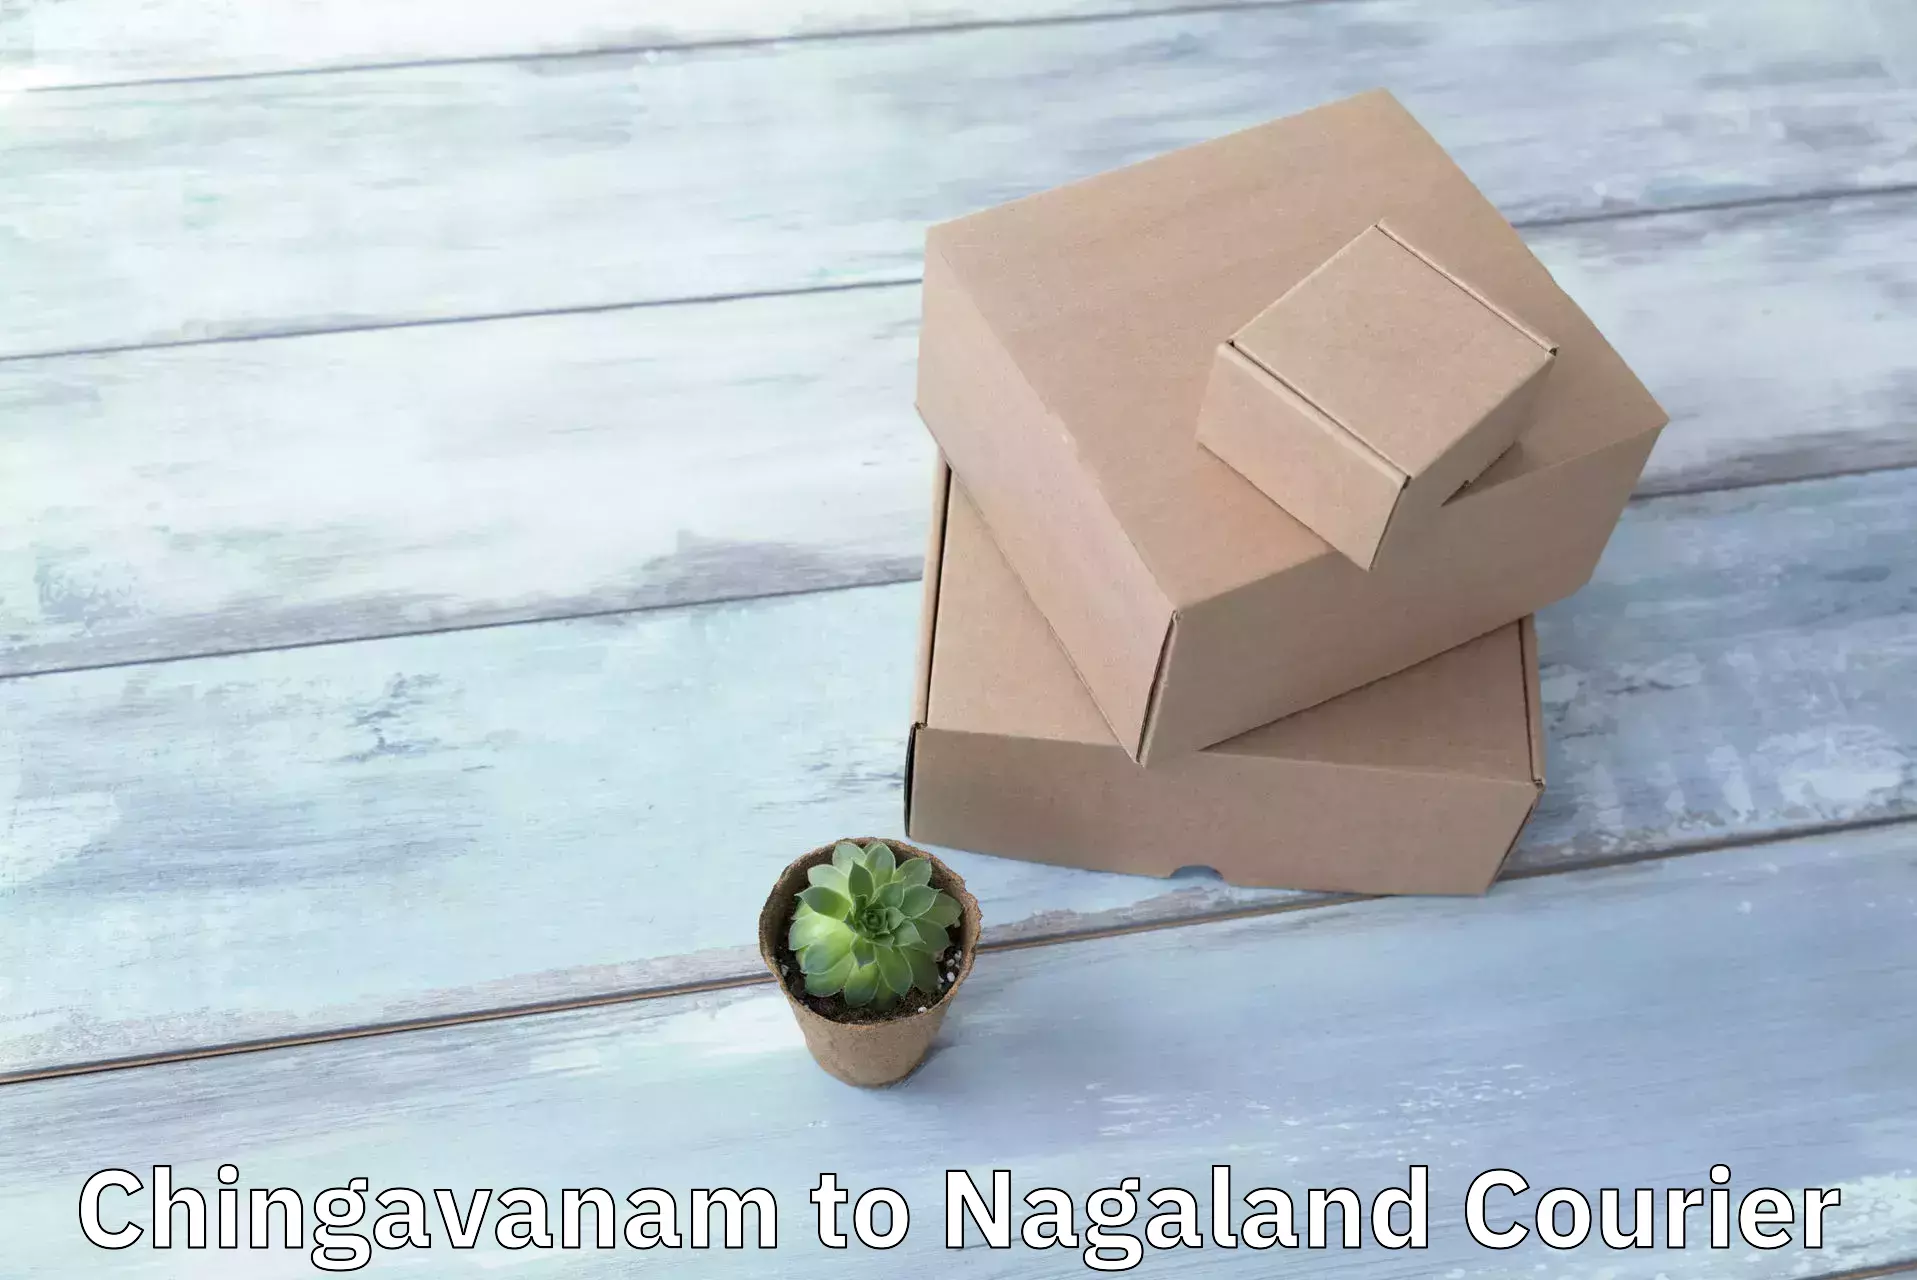 Lightweight parcel options Chingavanam to Nagaland